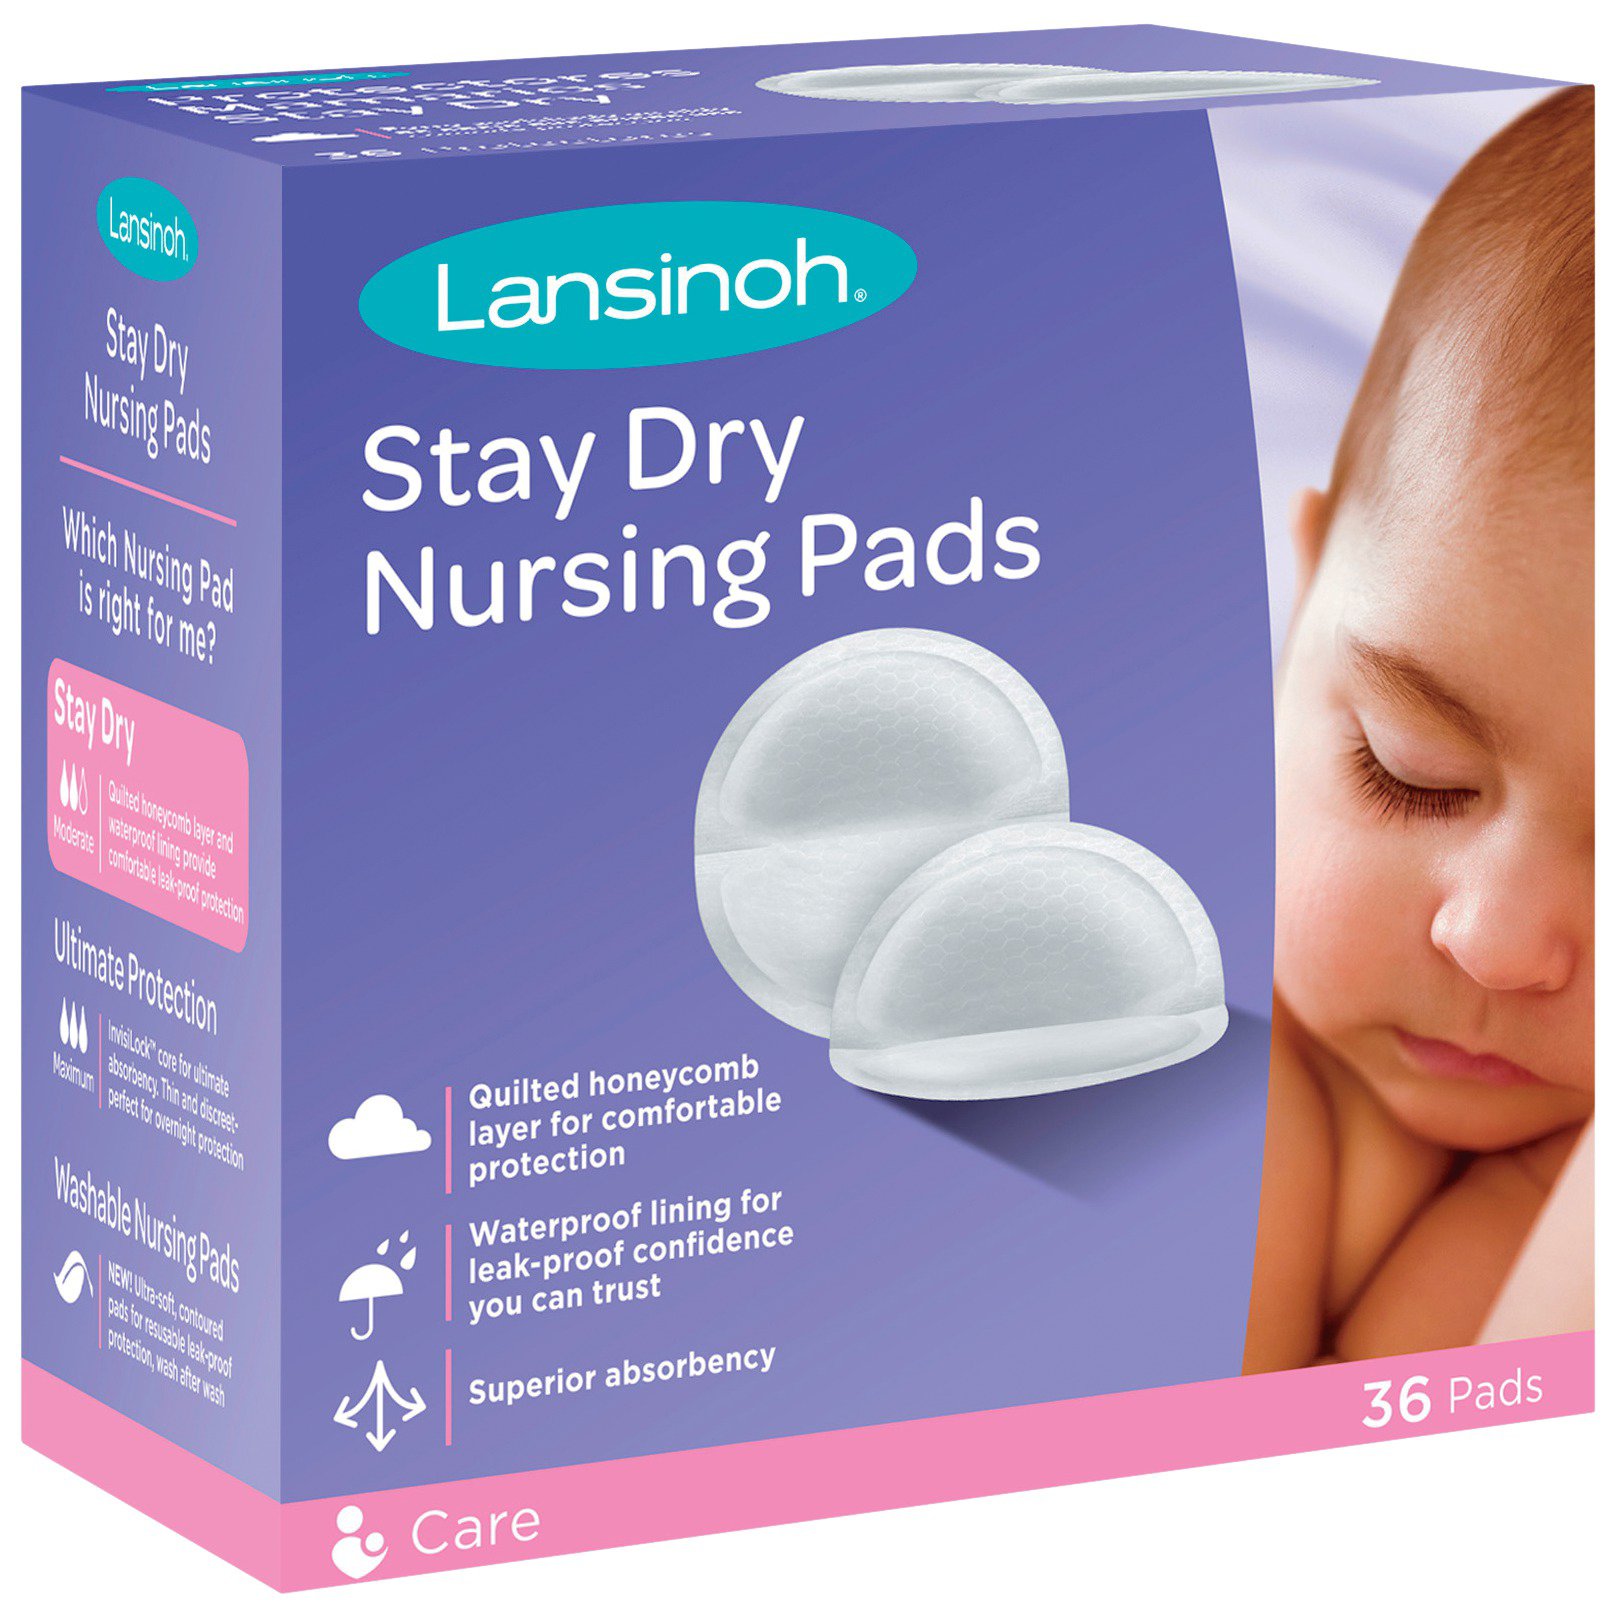 Lansinoh Stay Dry Nursing Pads 36 ct New in Box 